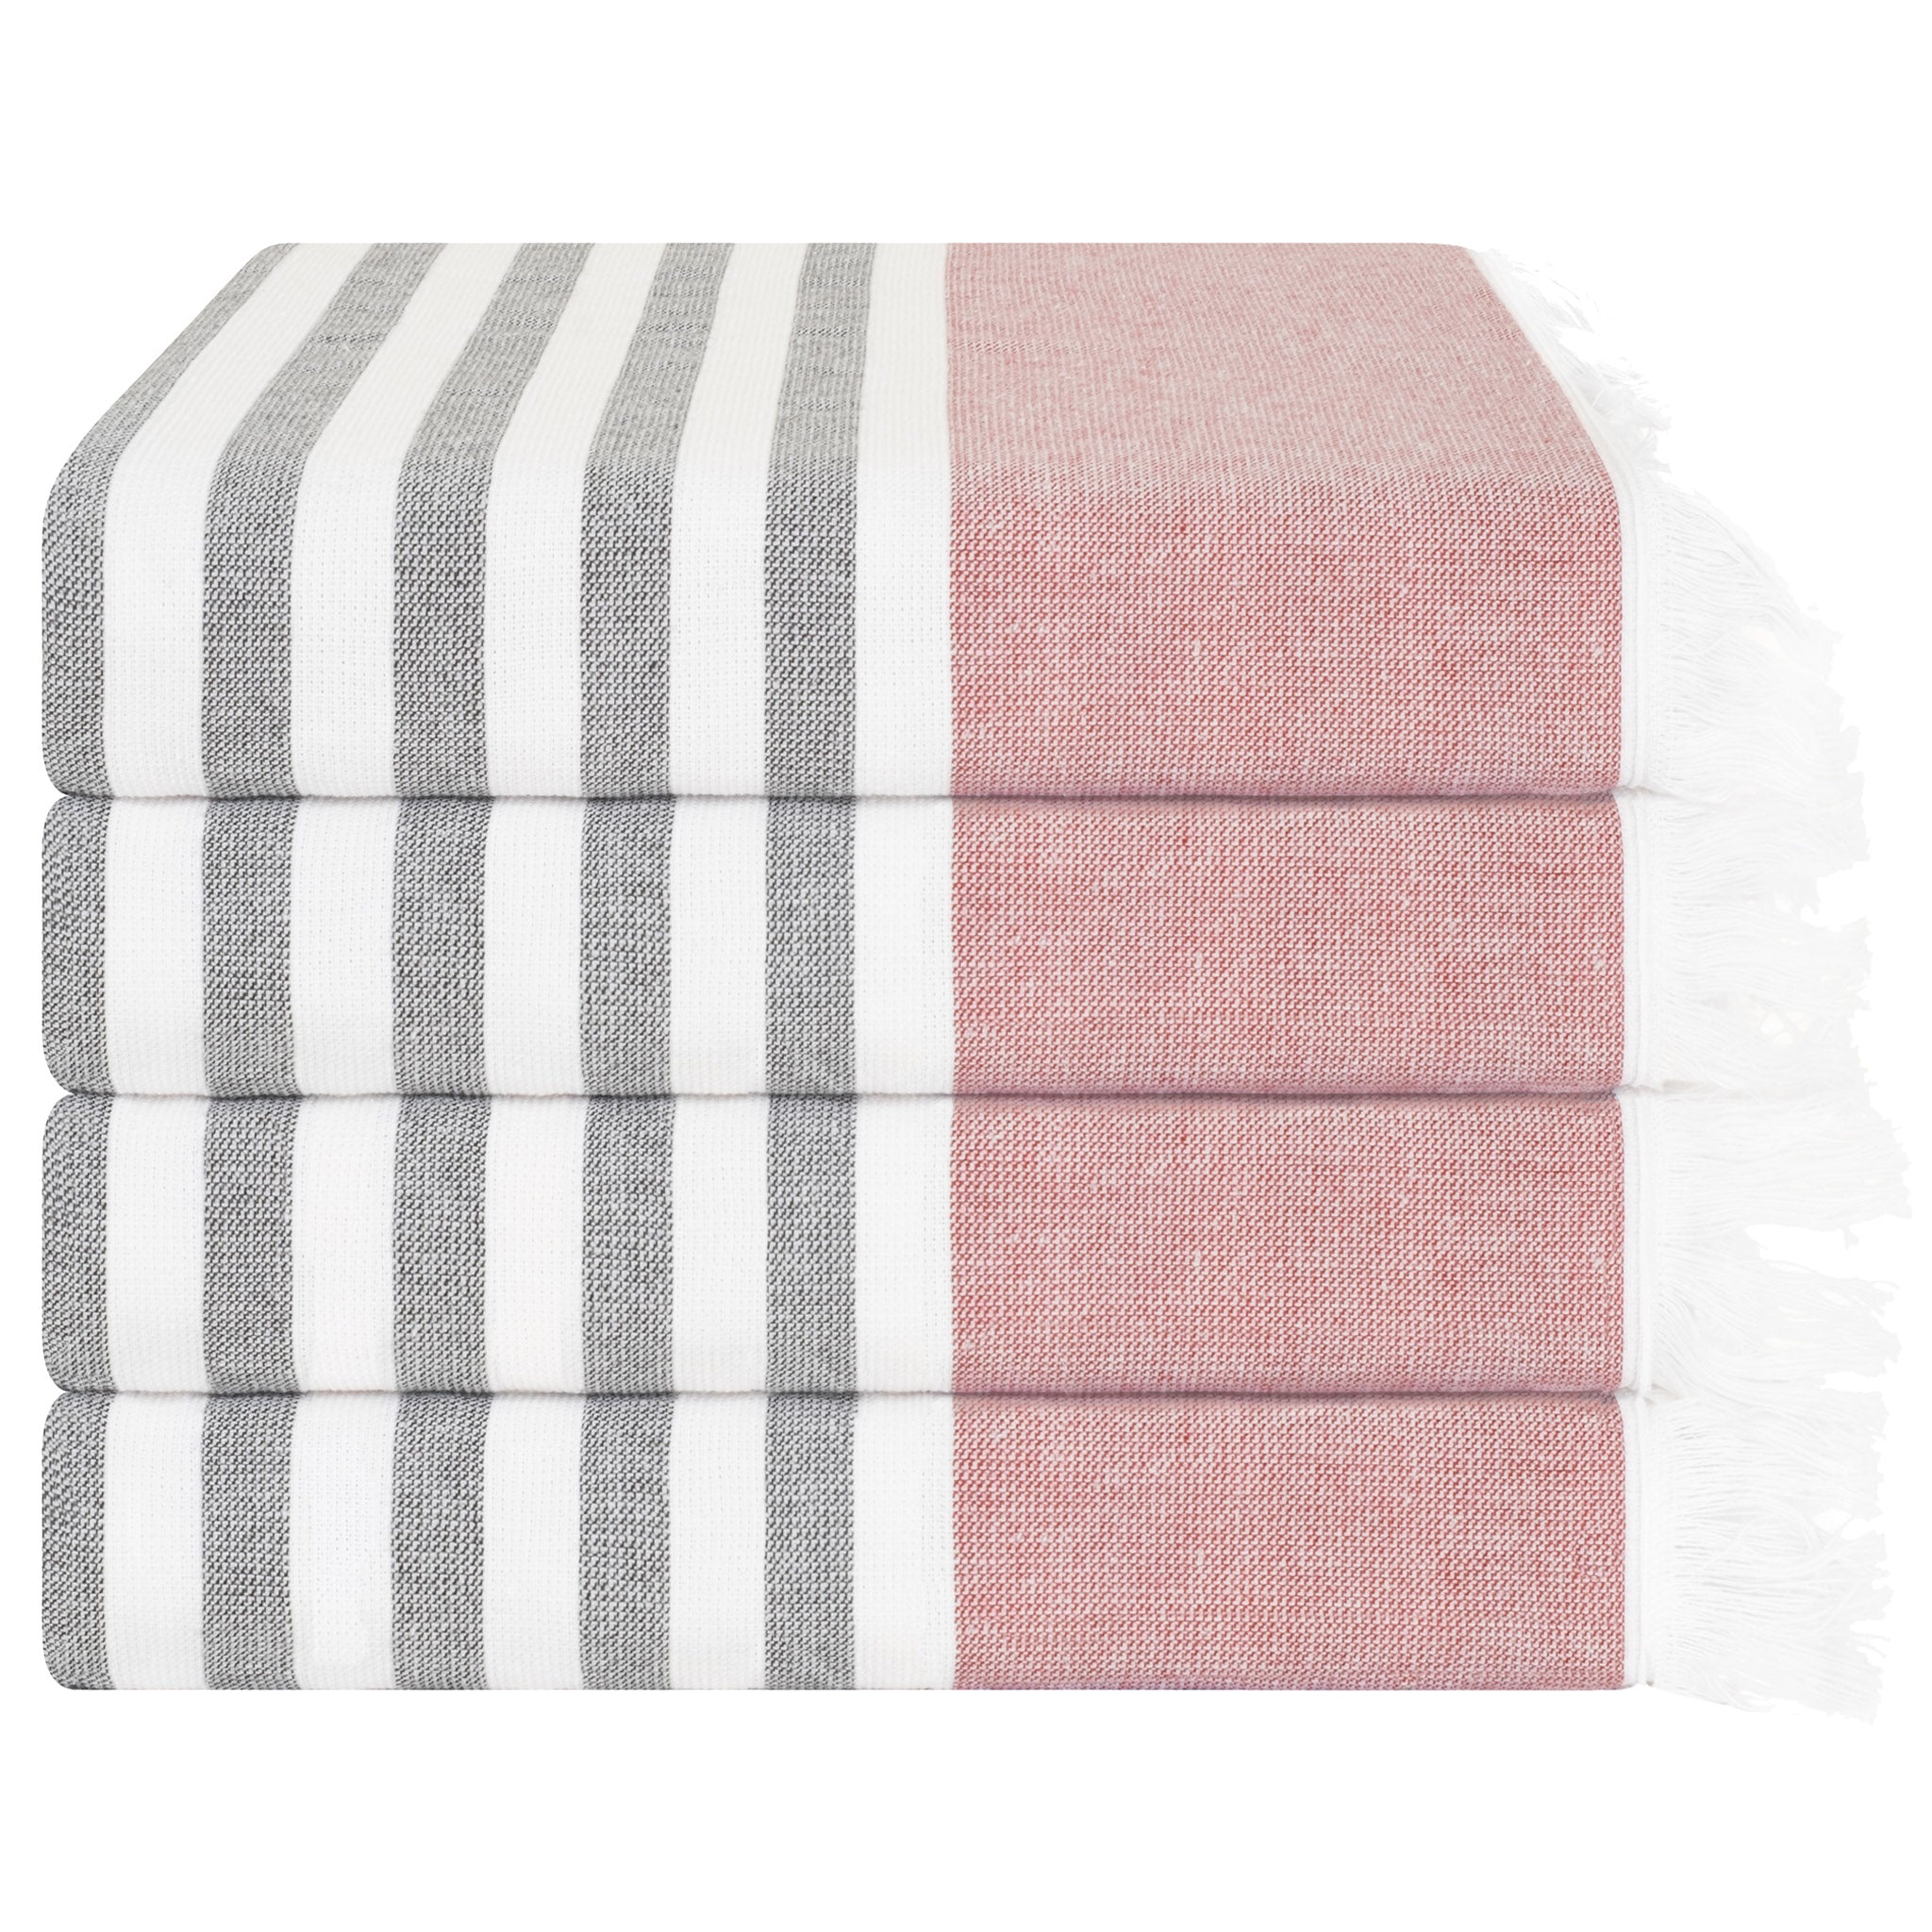 4 Packed 100% Cotton Terry Peshtemal & Beach Towel Rose-01